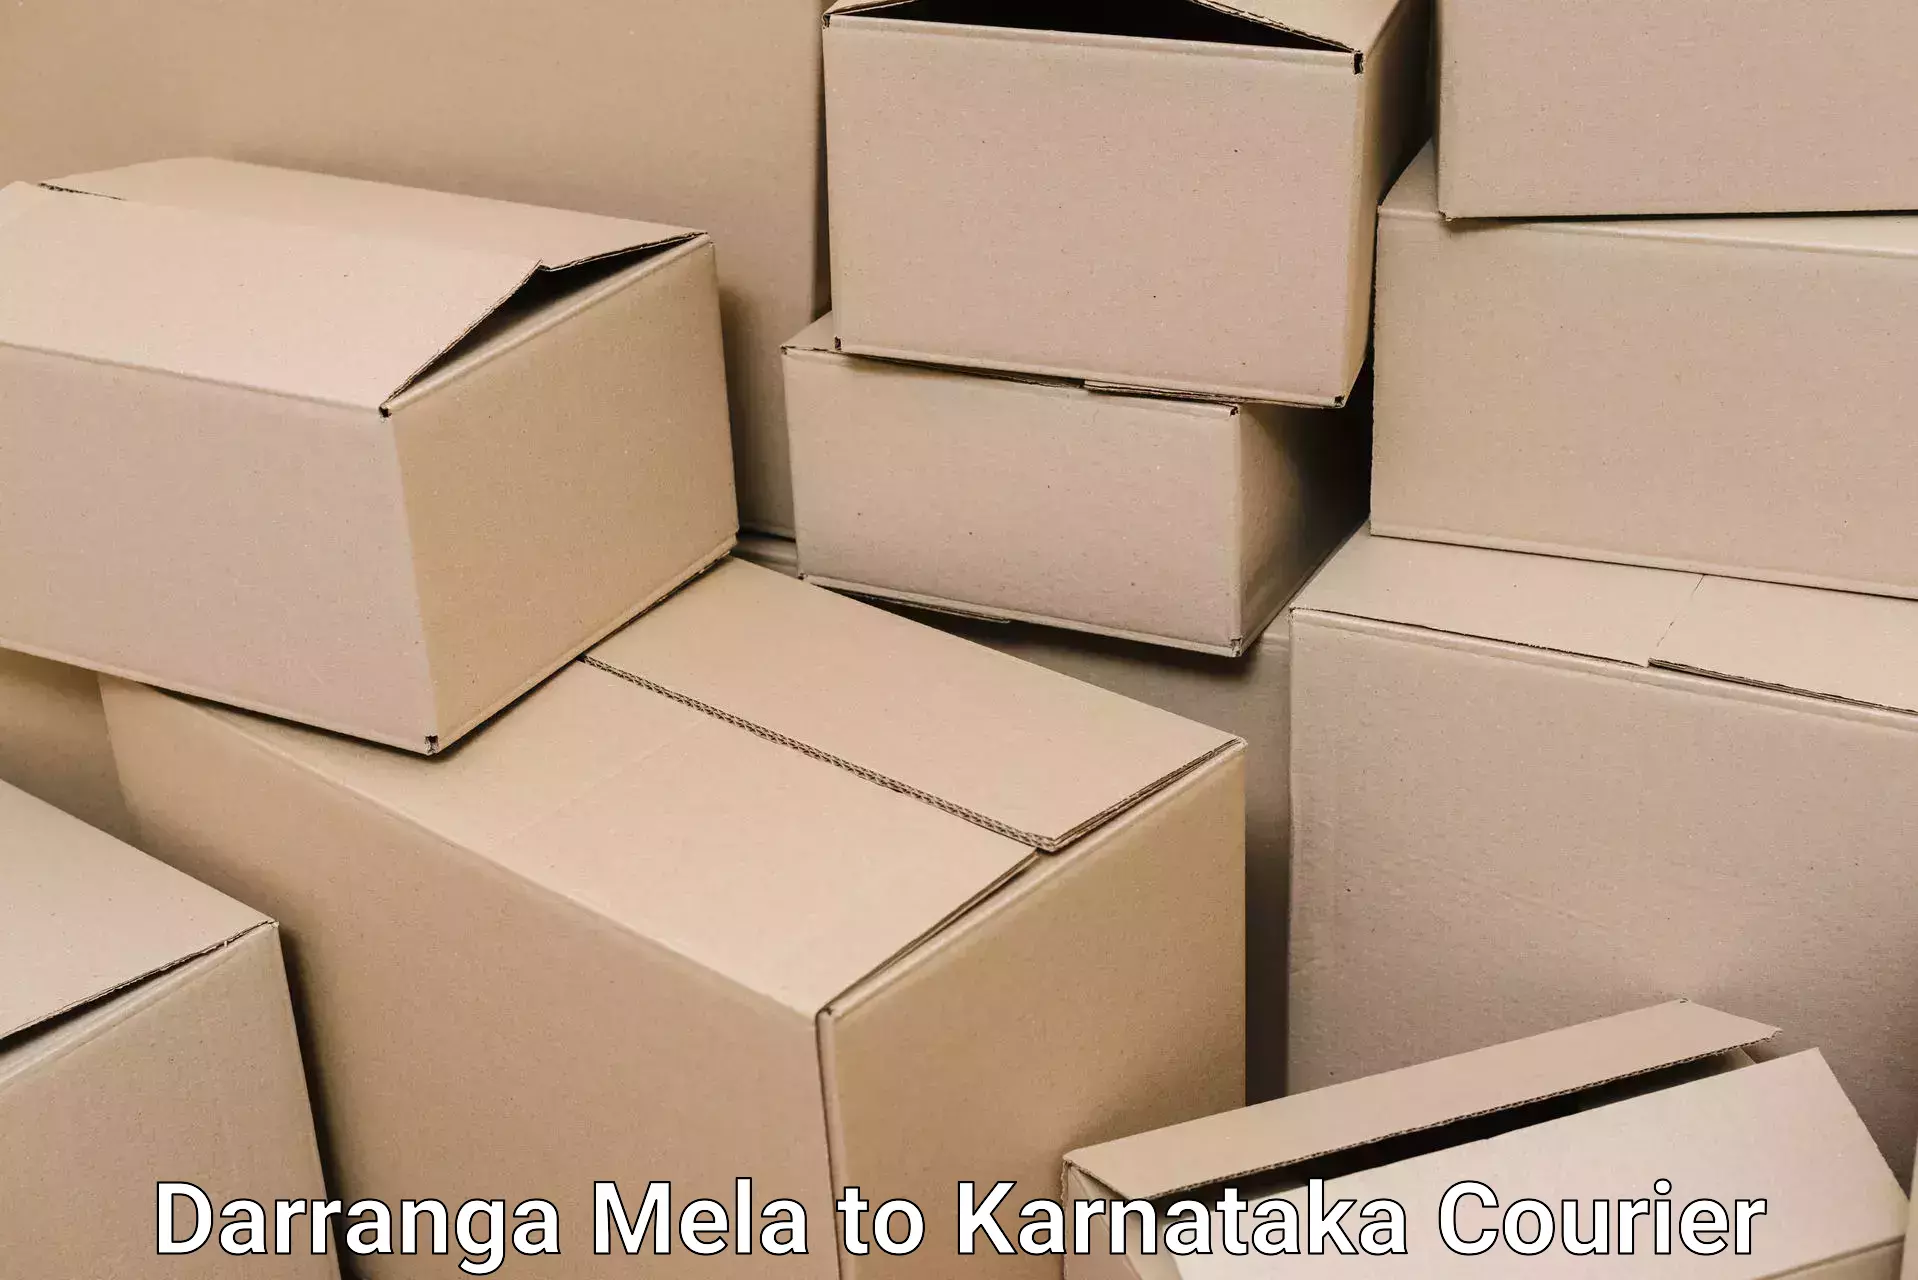 Budget-friendly movers Darranga Mela to Magadi